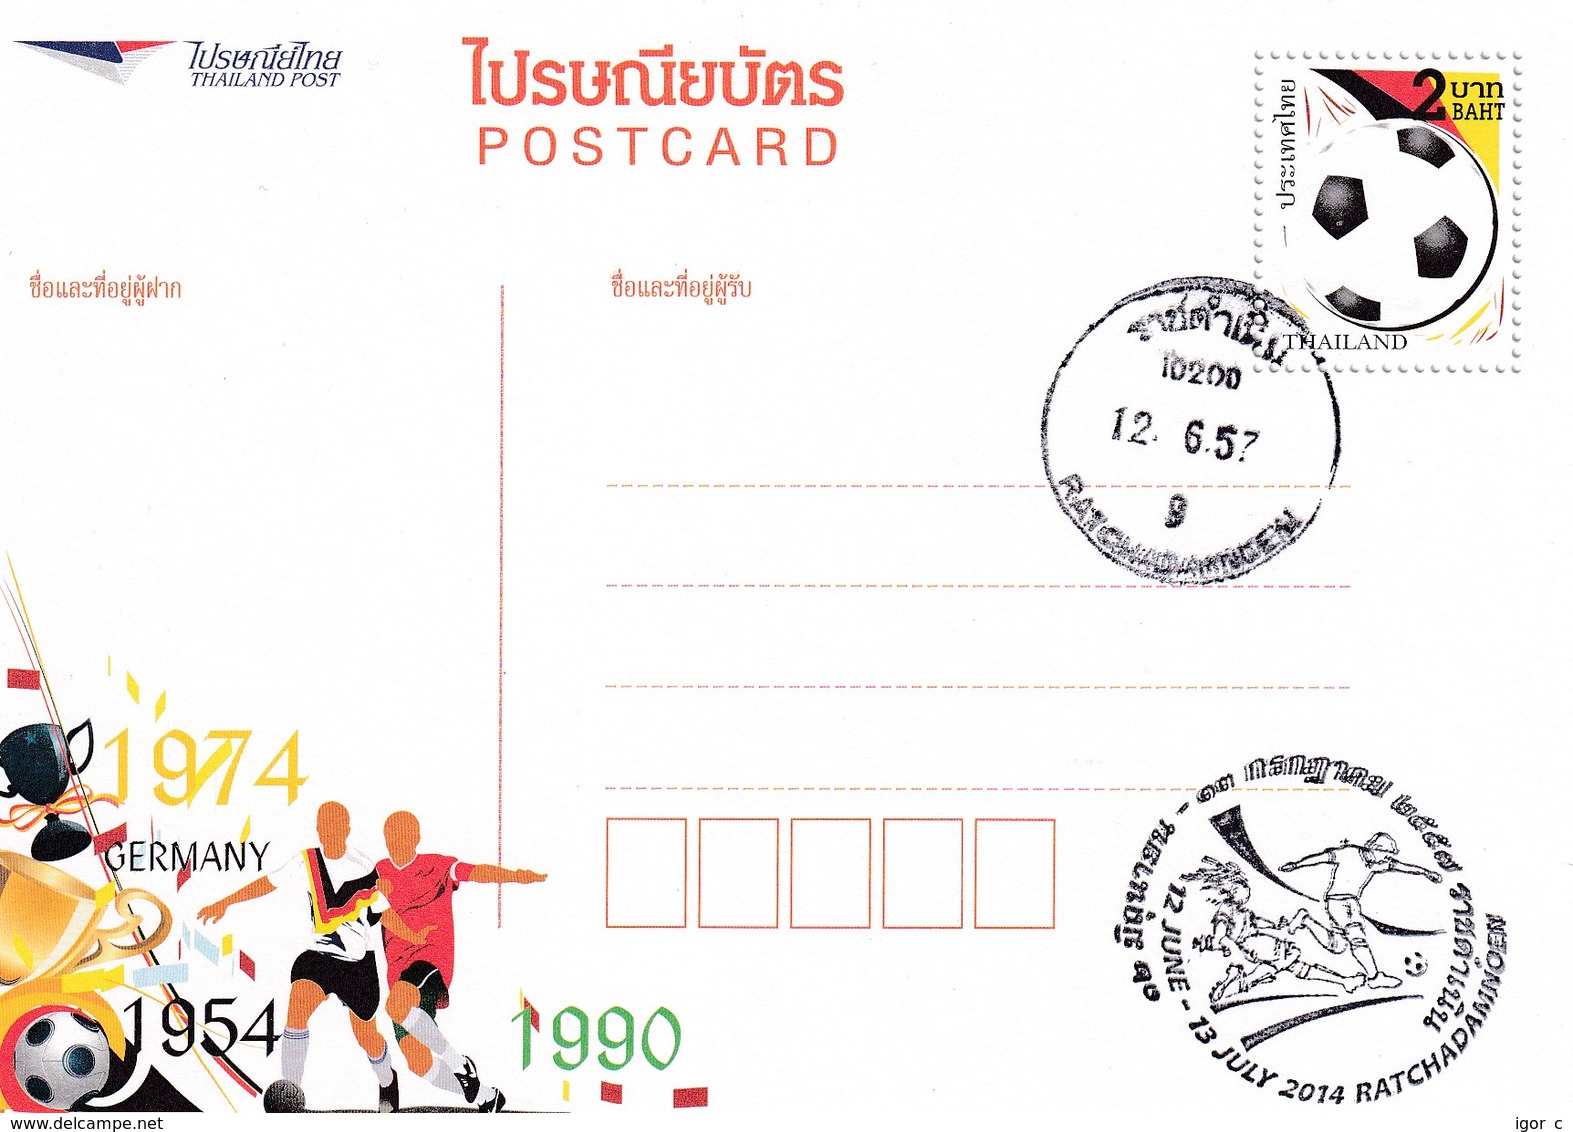 Thailand 2014 Postal Stationery Card: Football Fussball Soccer Calcio; FIFA World Cup 1954 1974 1990 Germany Champion - 1954 – Zwitserland